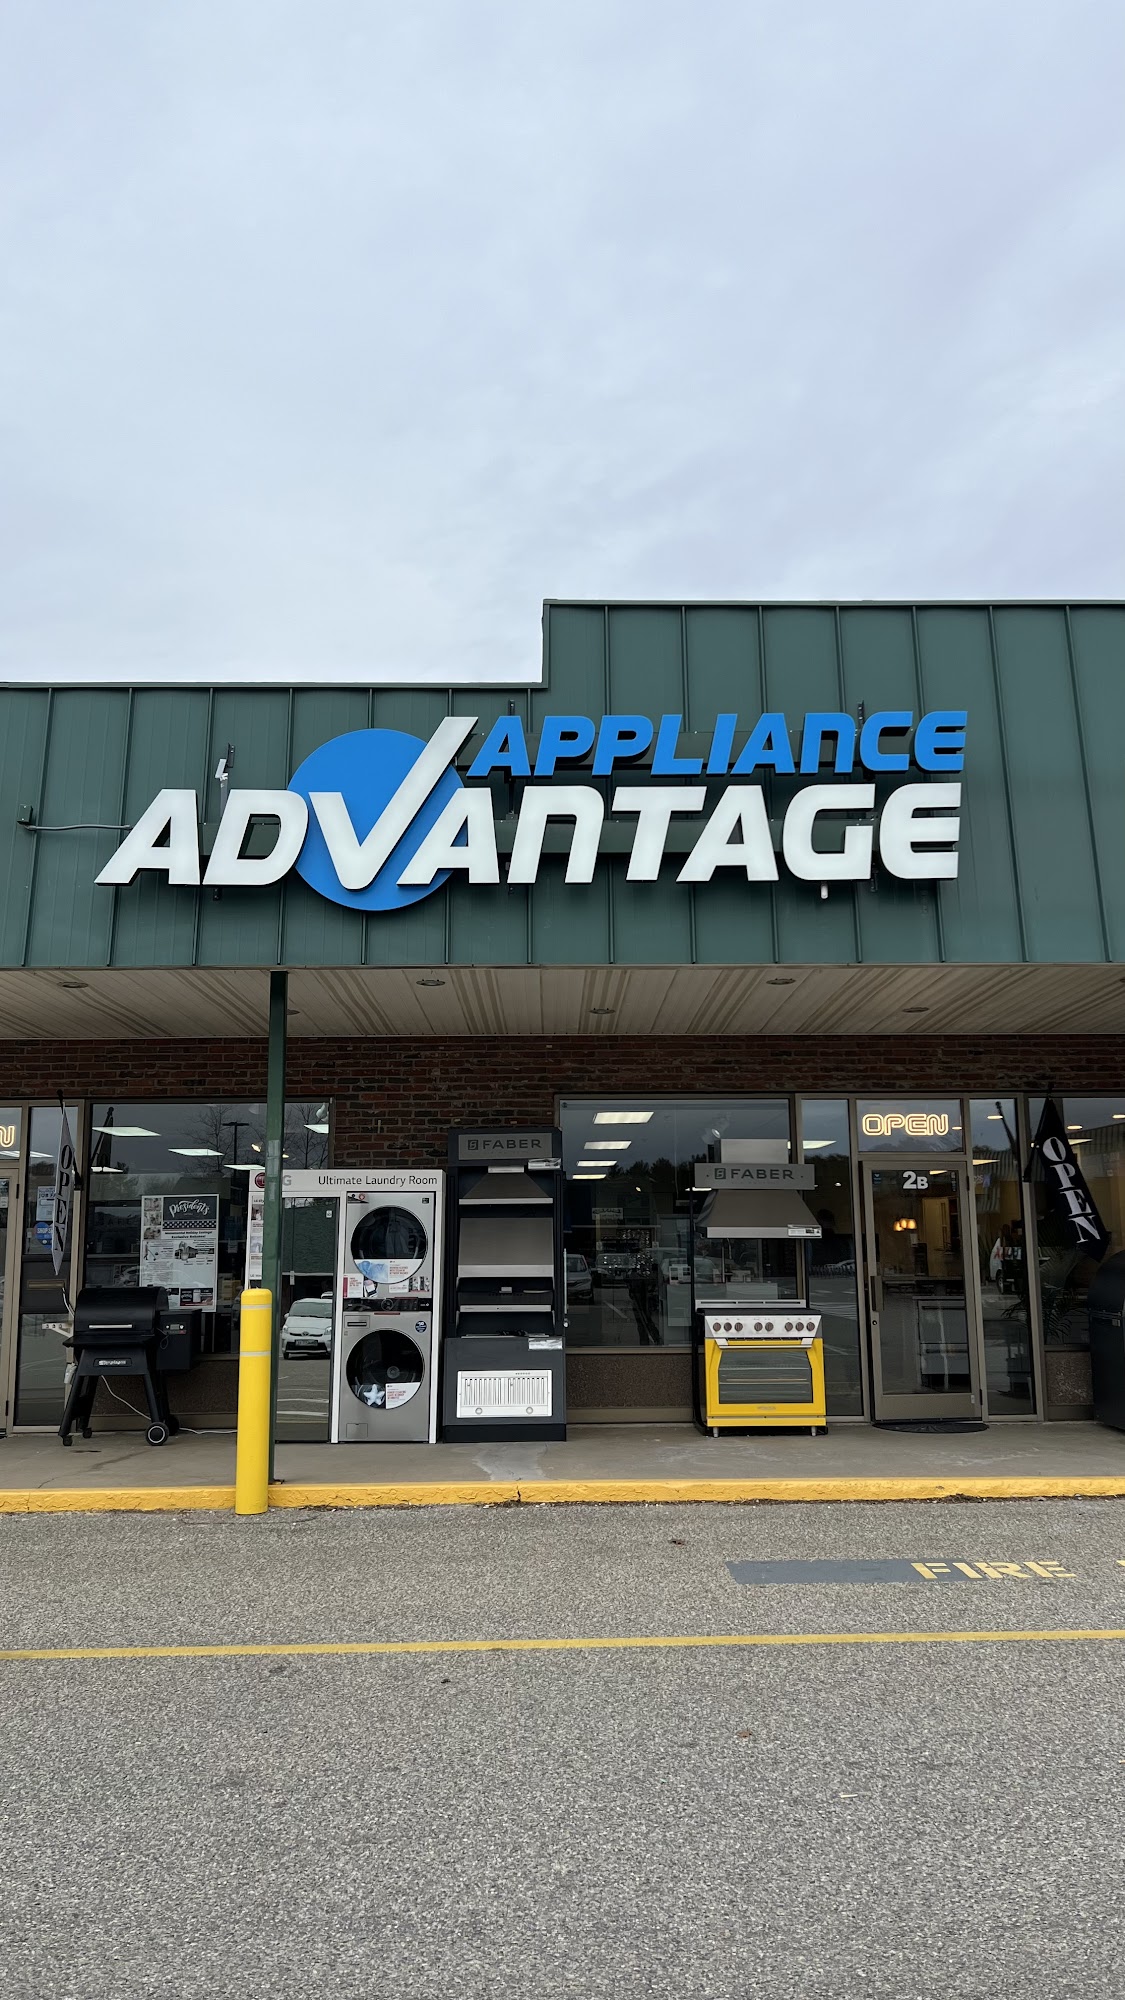 Appliance Advantage